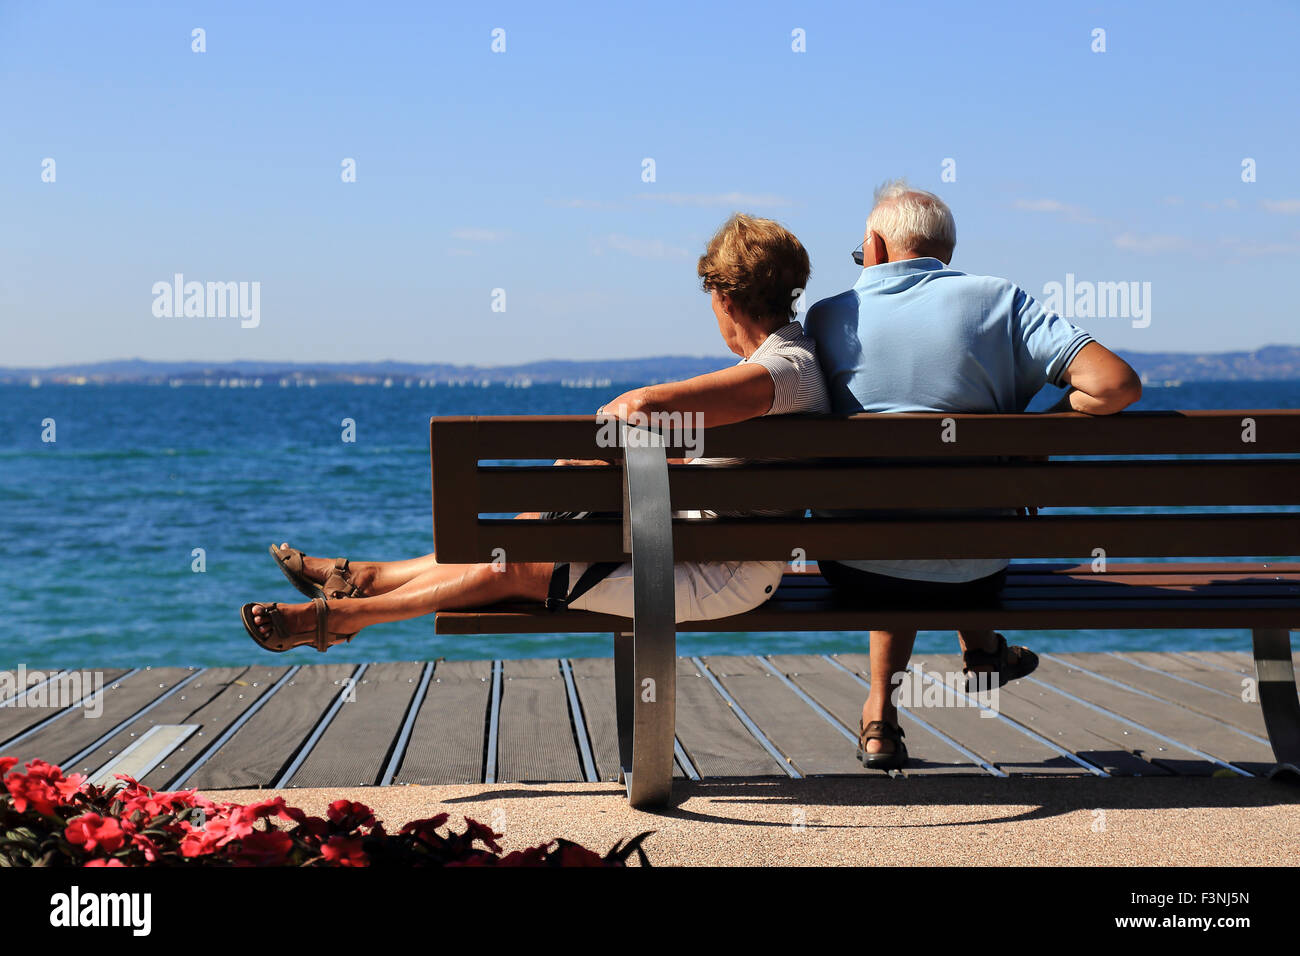 Man and woman resting on a bench, Bardolino, Lake Garda, Italy Stock Photo